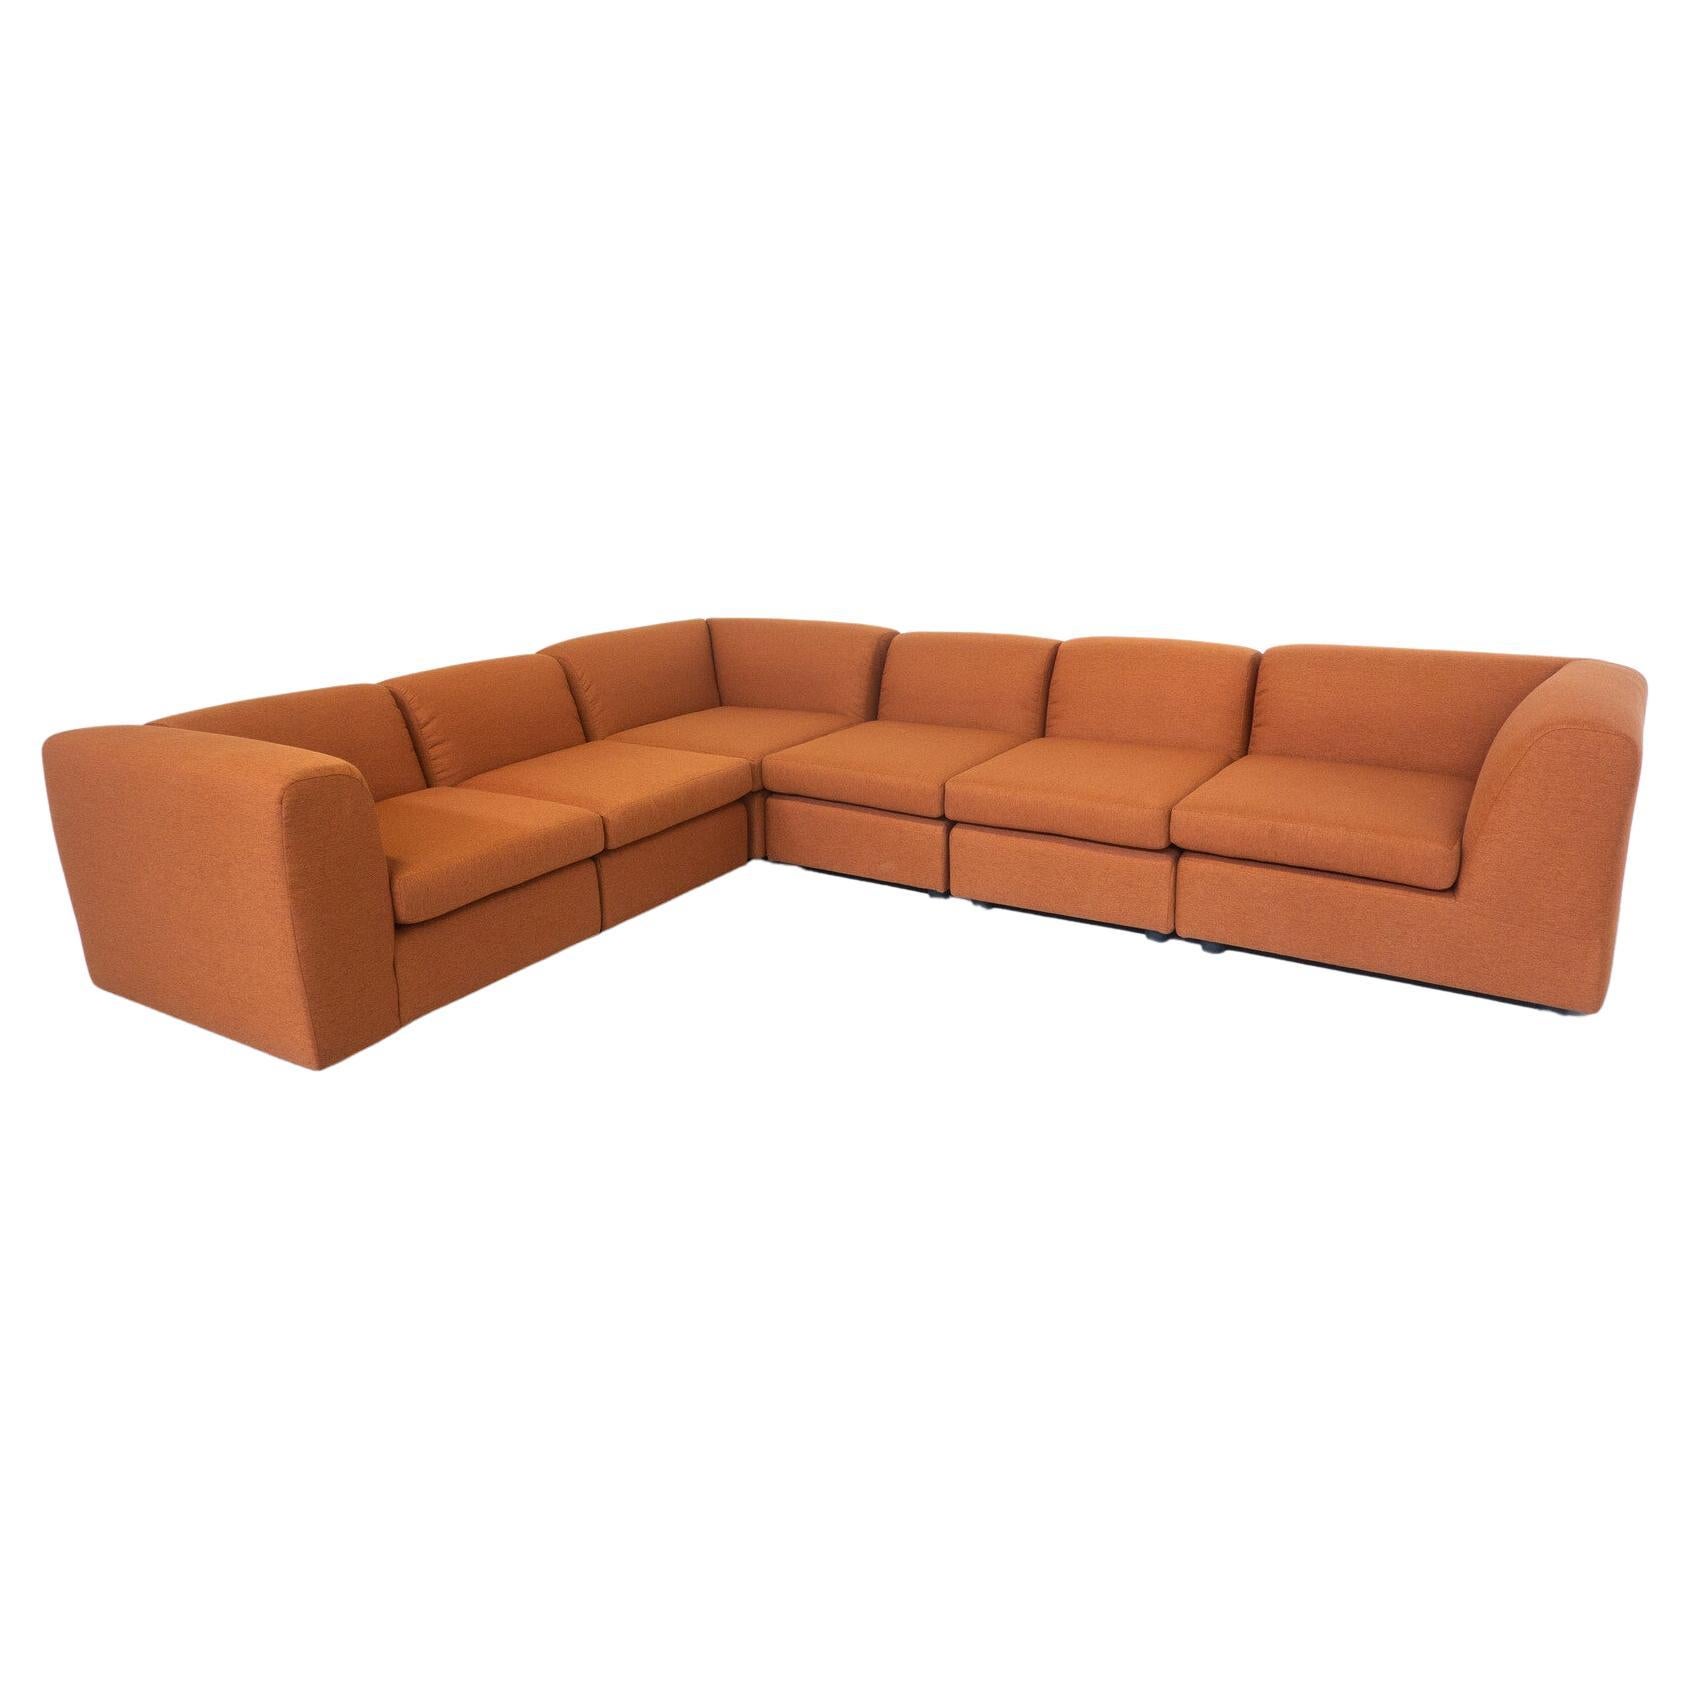 Mid-Century Modern Orange Modular Sofa, Italy, 1960s - New Upholstery For Sale